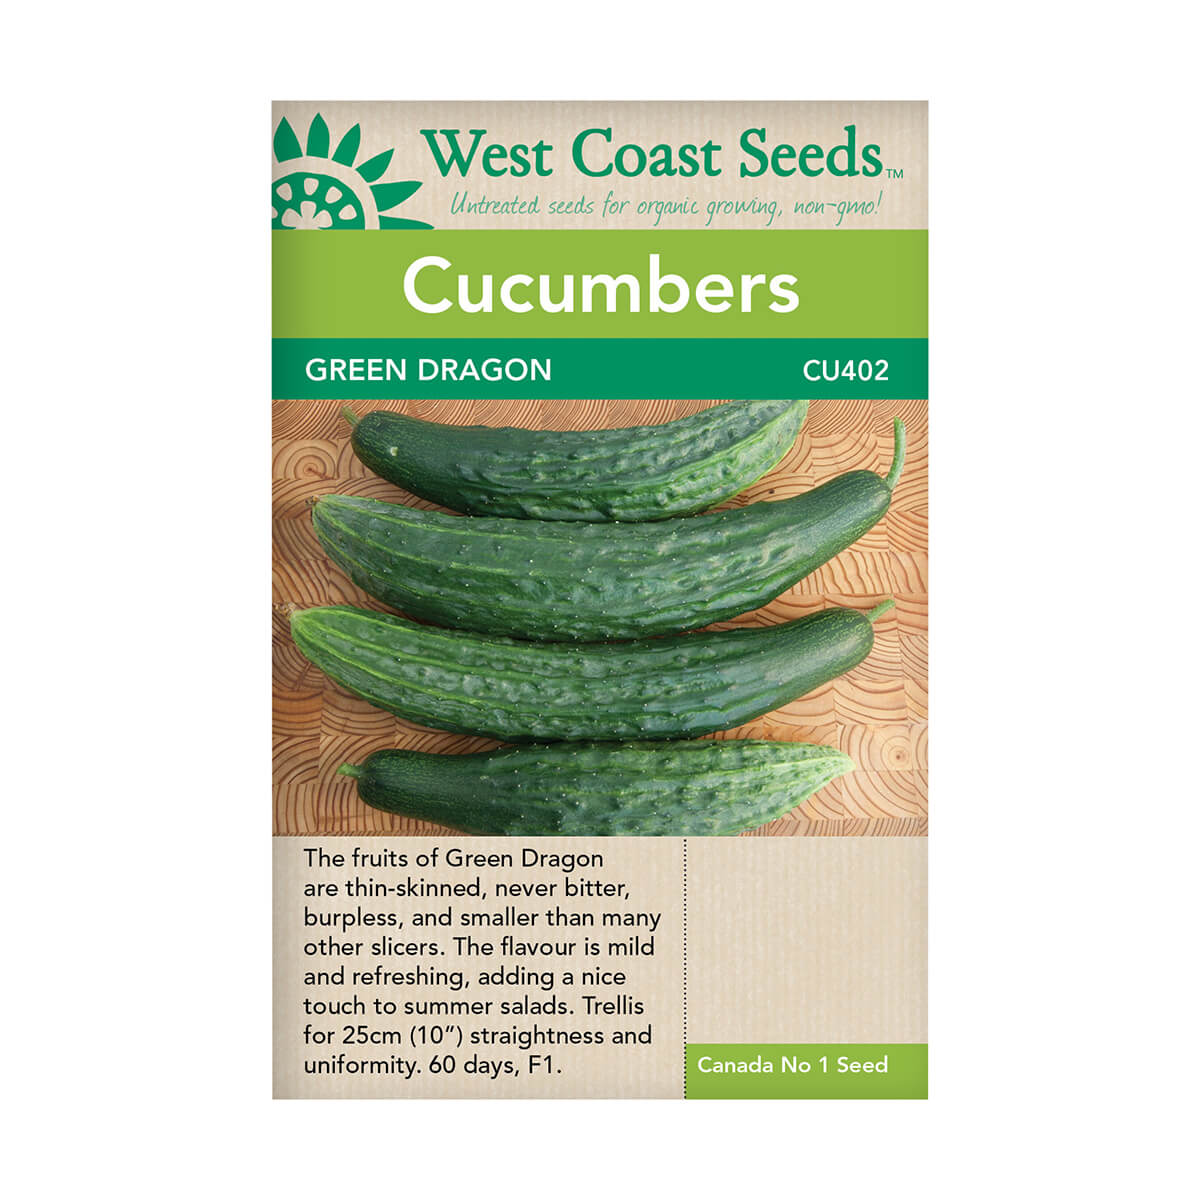 Green Dragon Cucumber Seeds - approx. 34 seeds